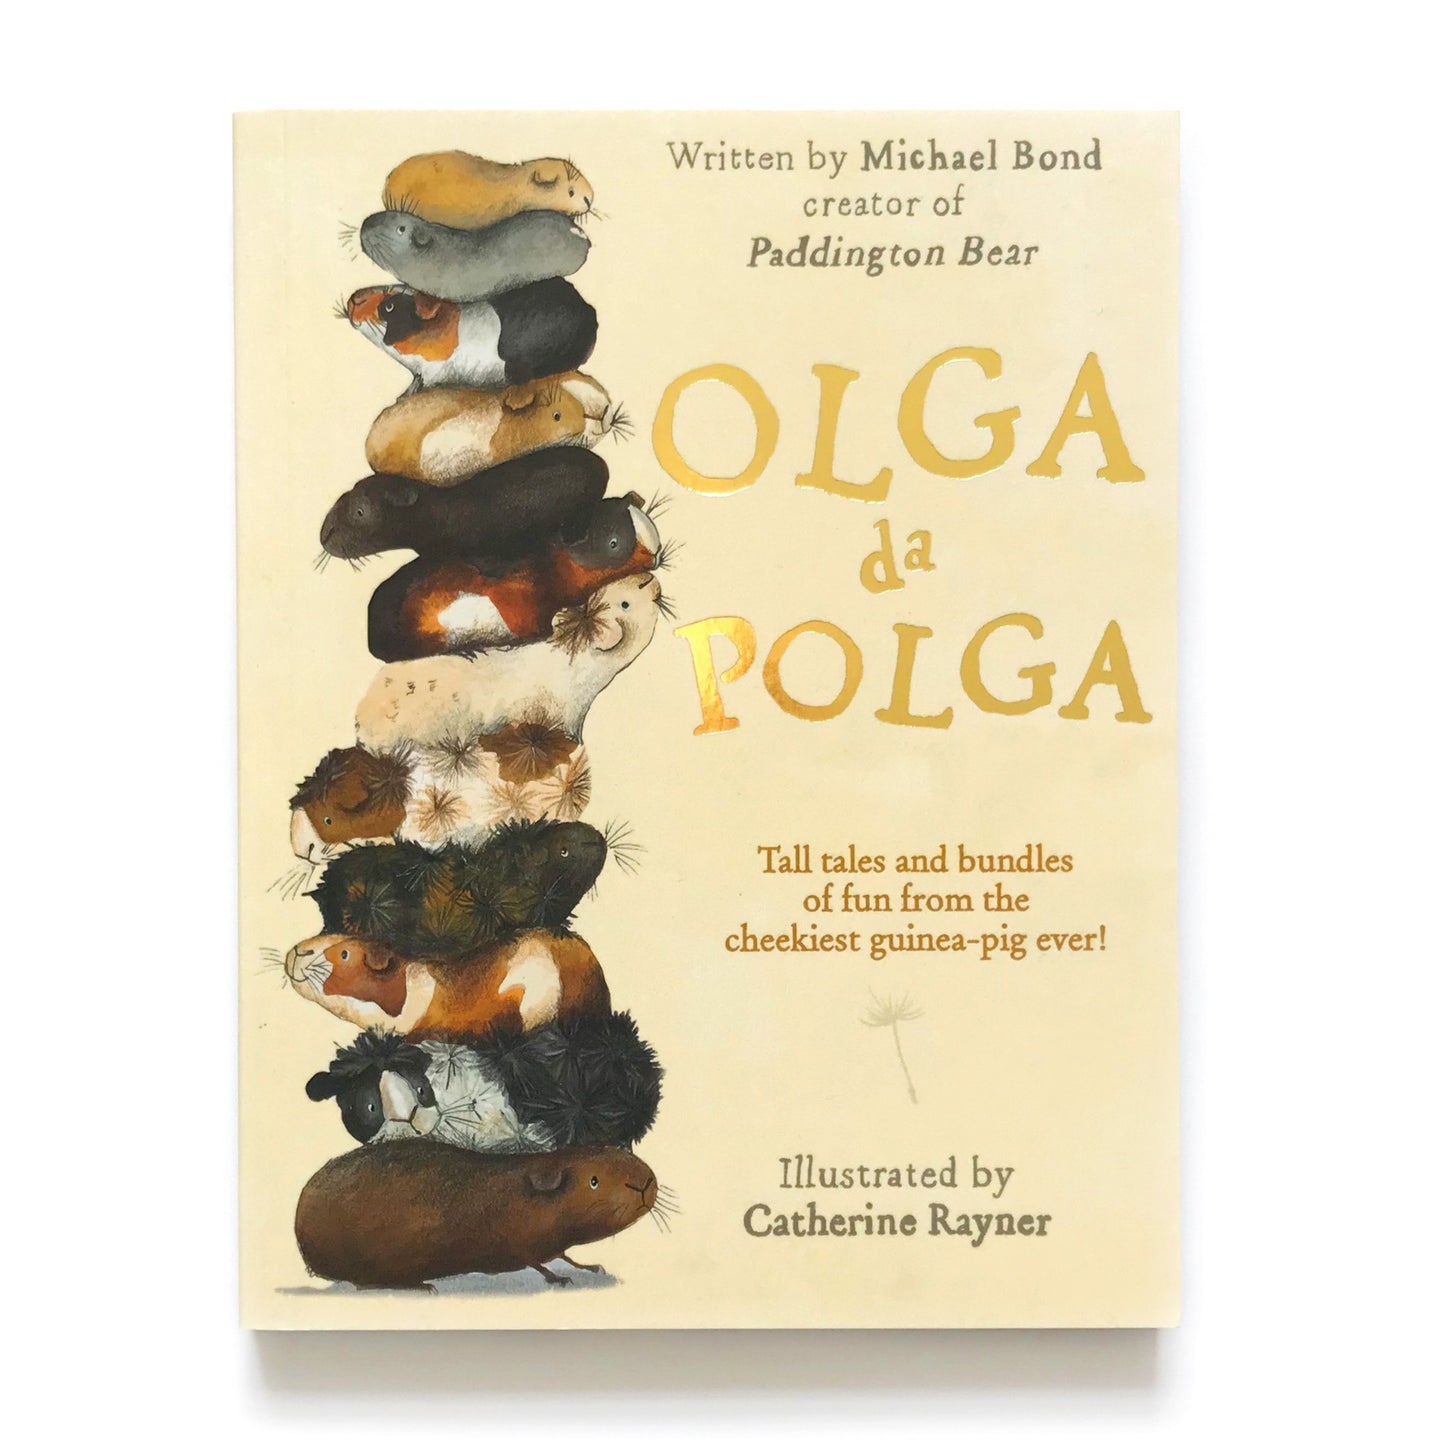 Olga da Polga (Signed copy)